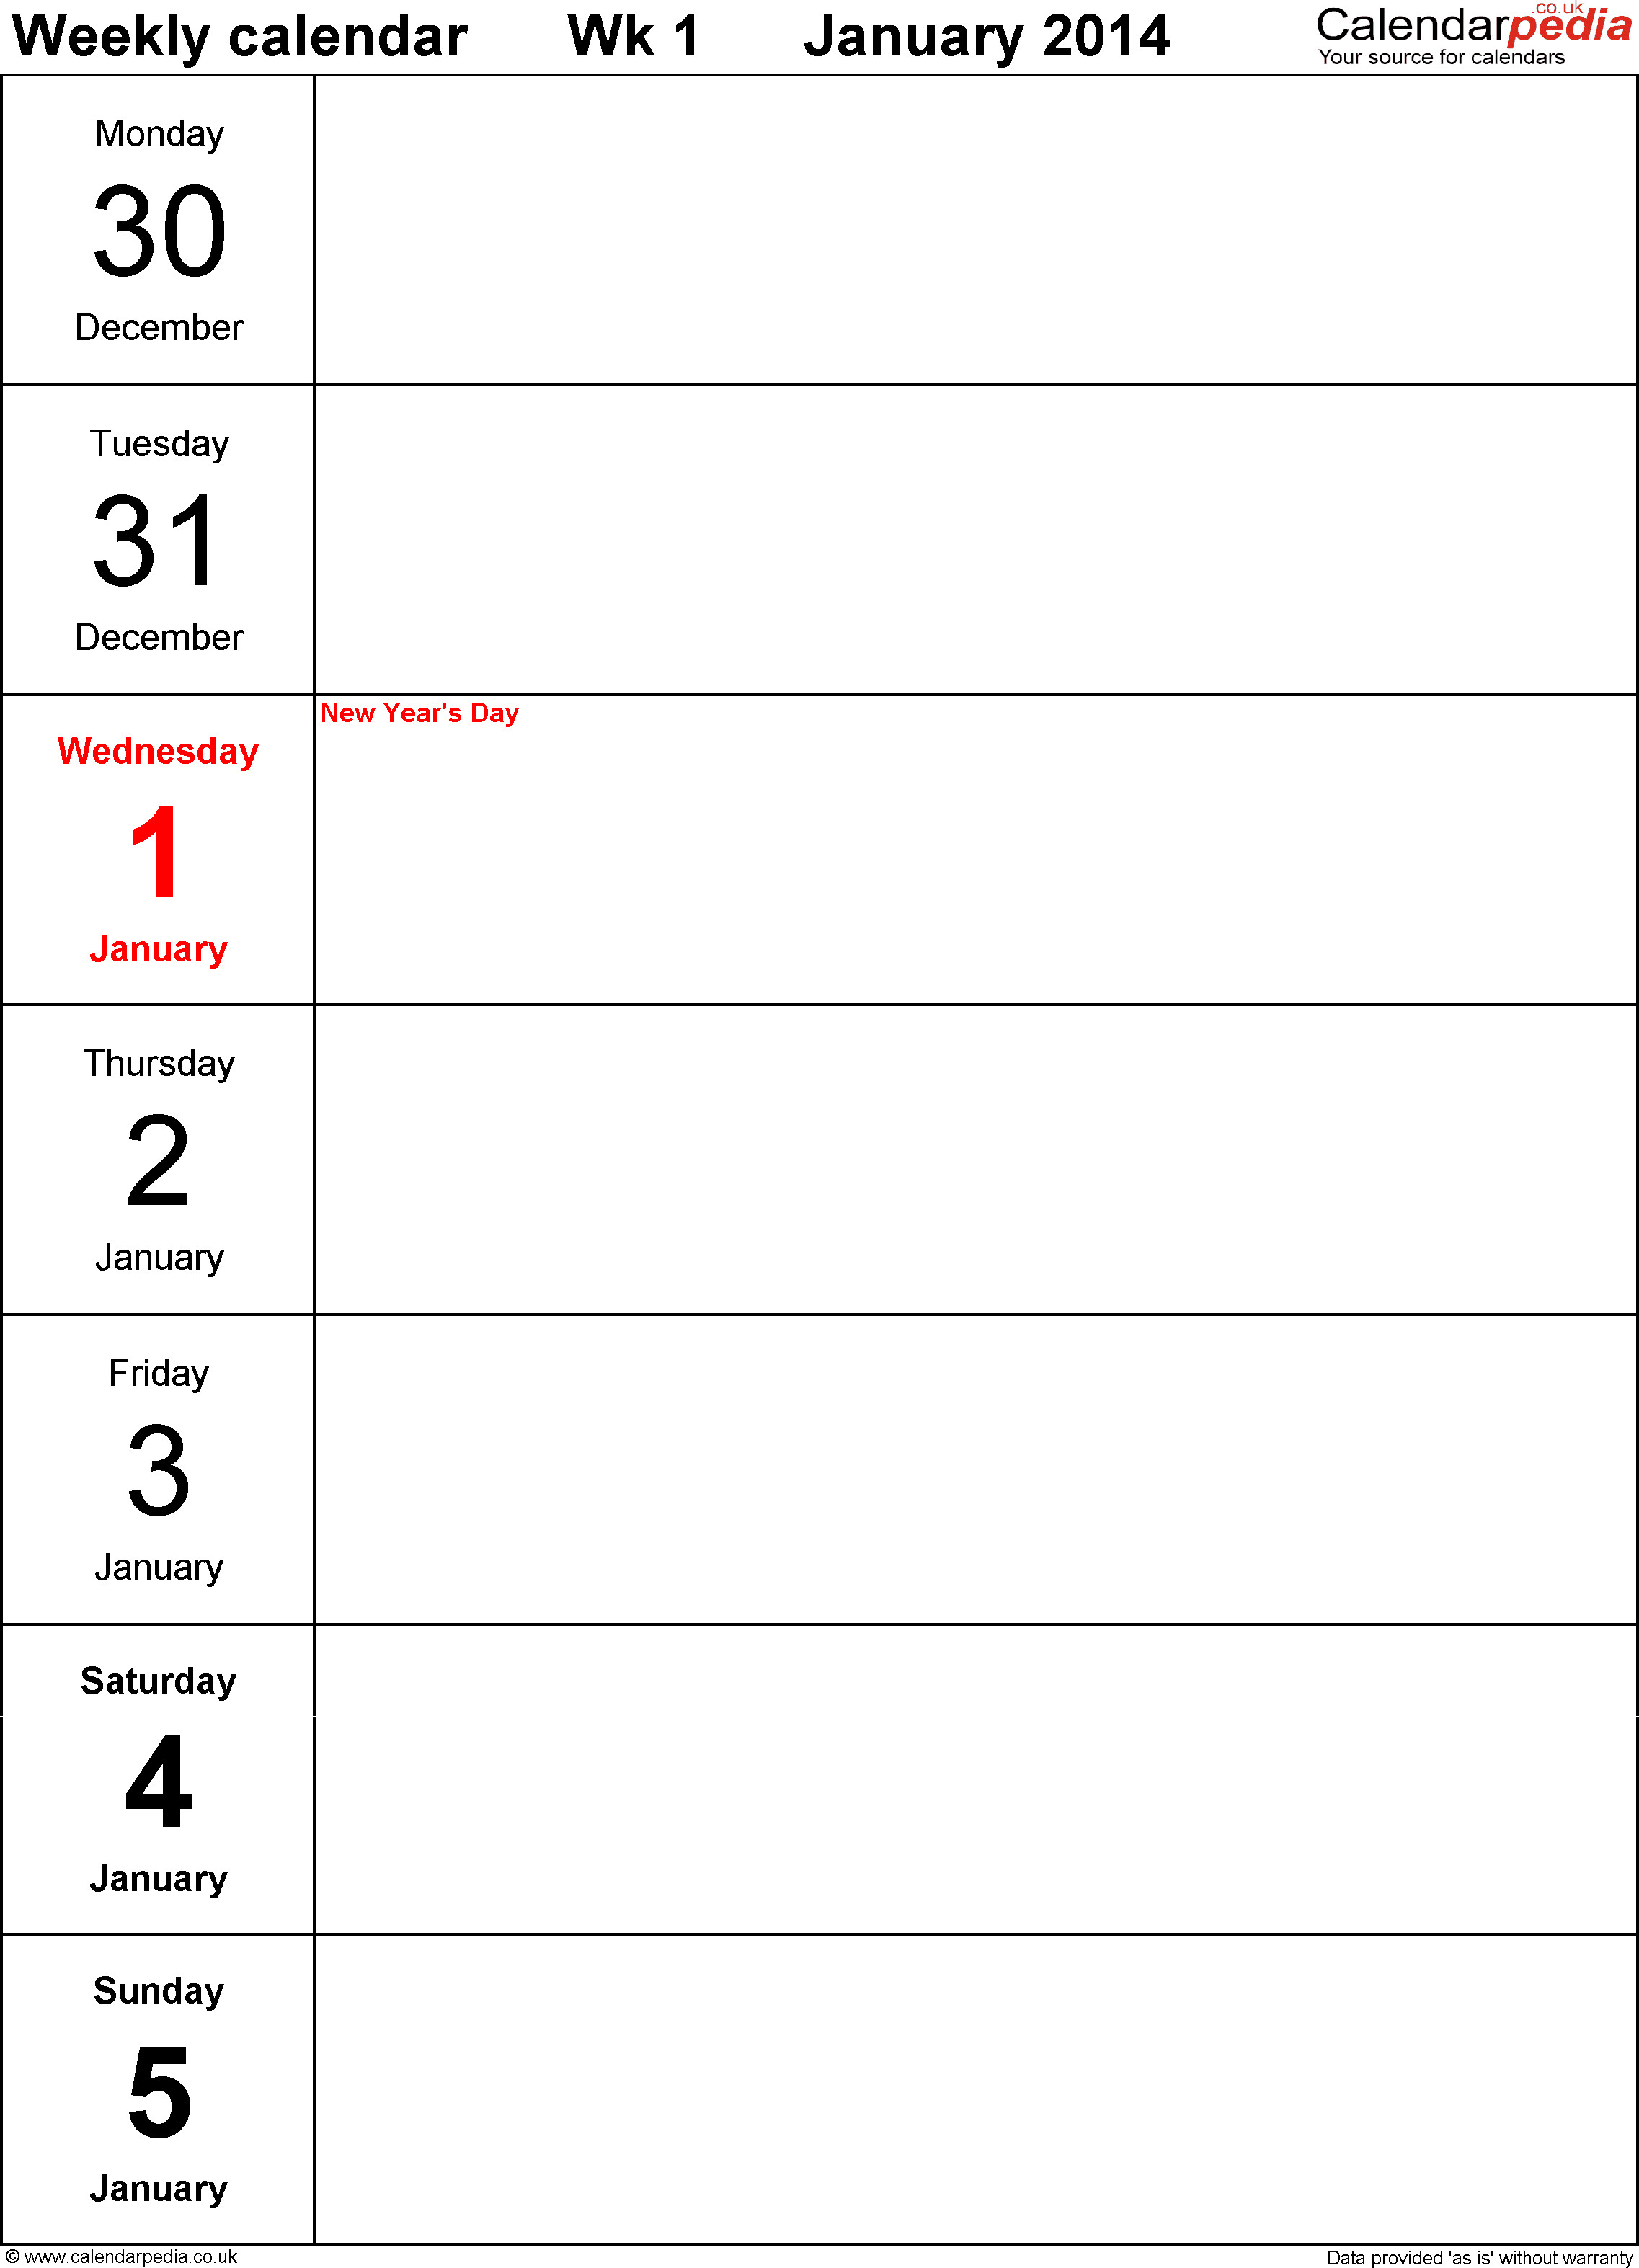 Weekly calendar 2014 UK free printable templates for PDF